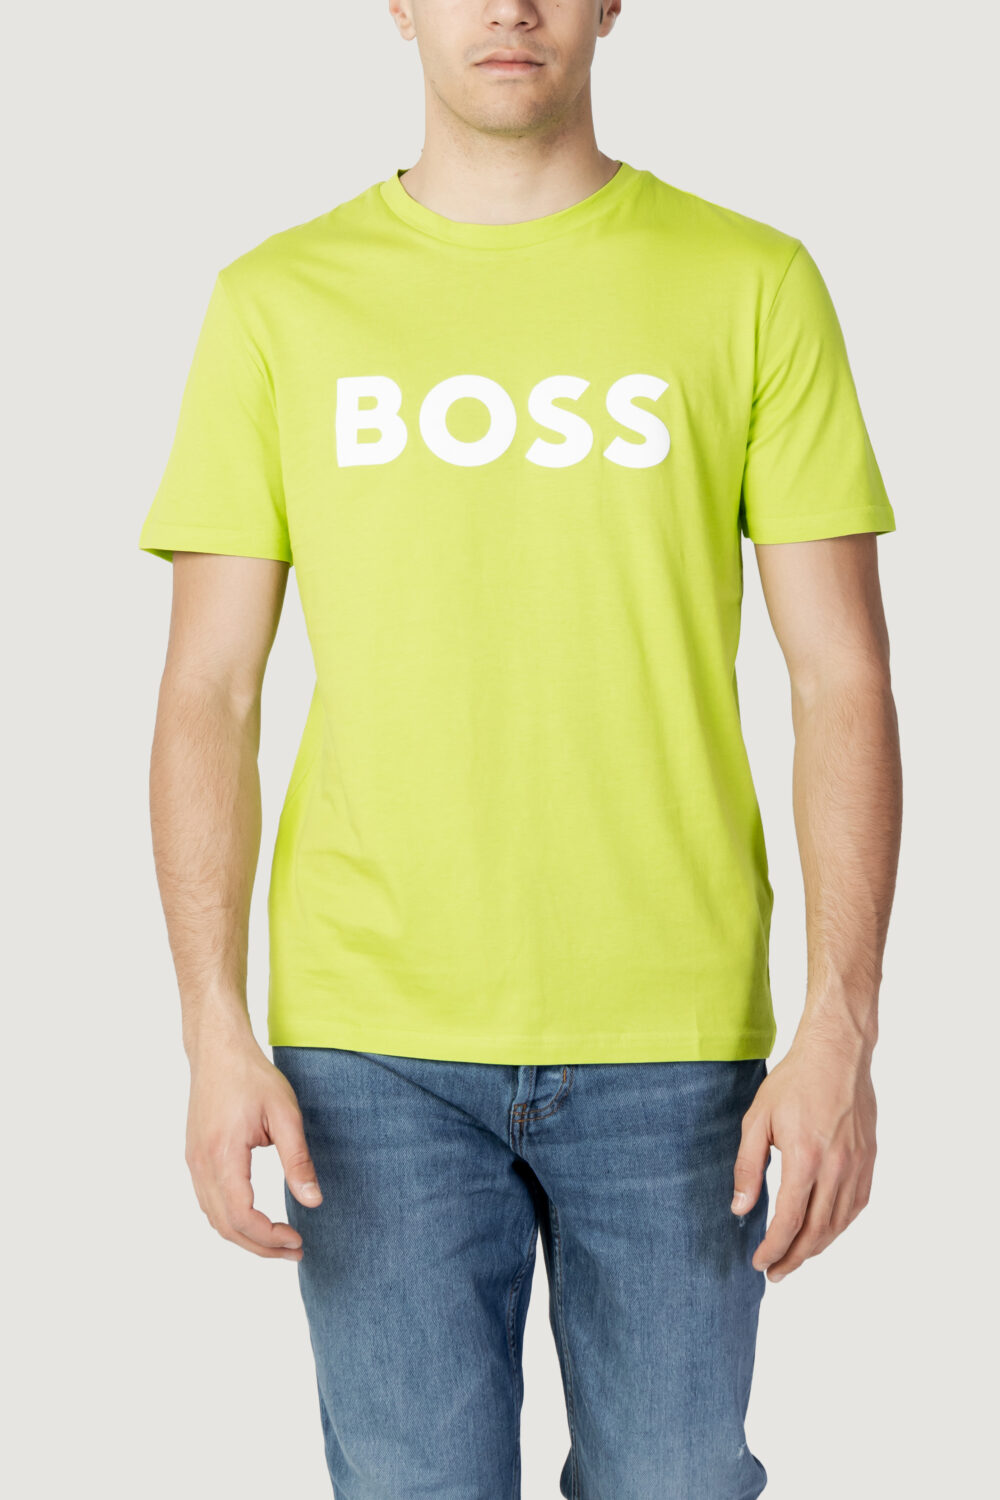 T-shirt Boss jersey thinking 1 Verde flavour - Foto 1